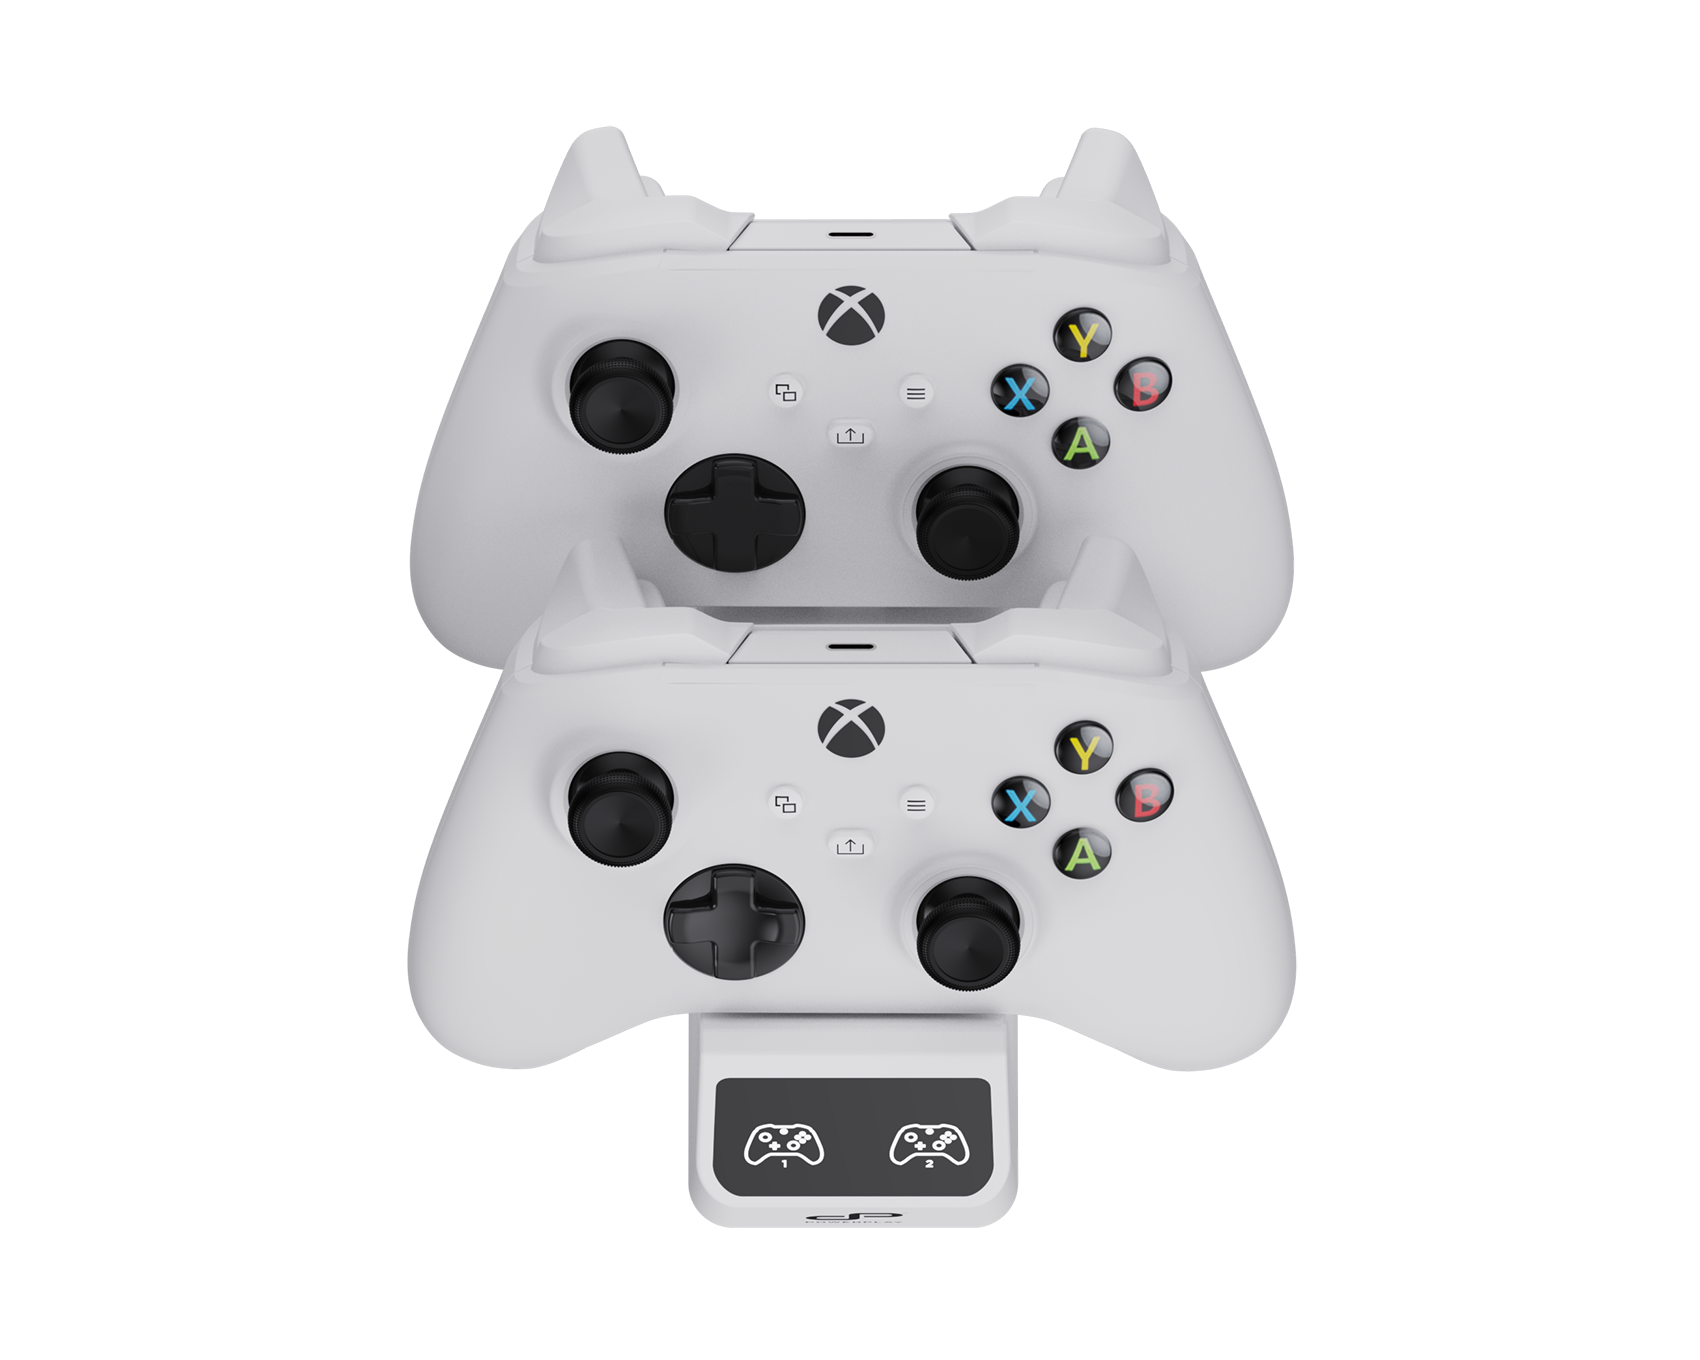 PowerPlay Xbox Dual Charging Station (White)